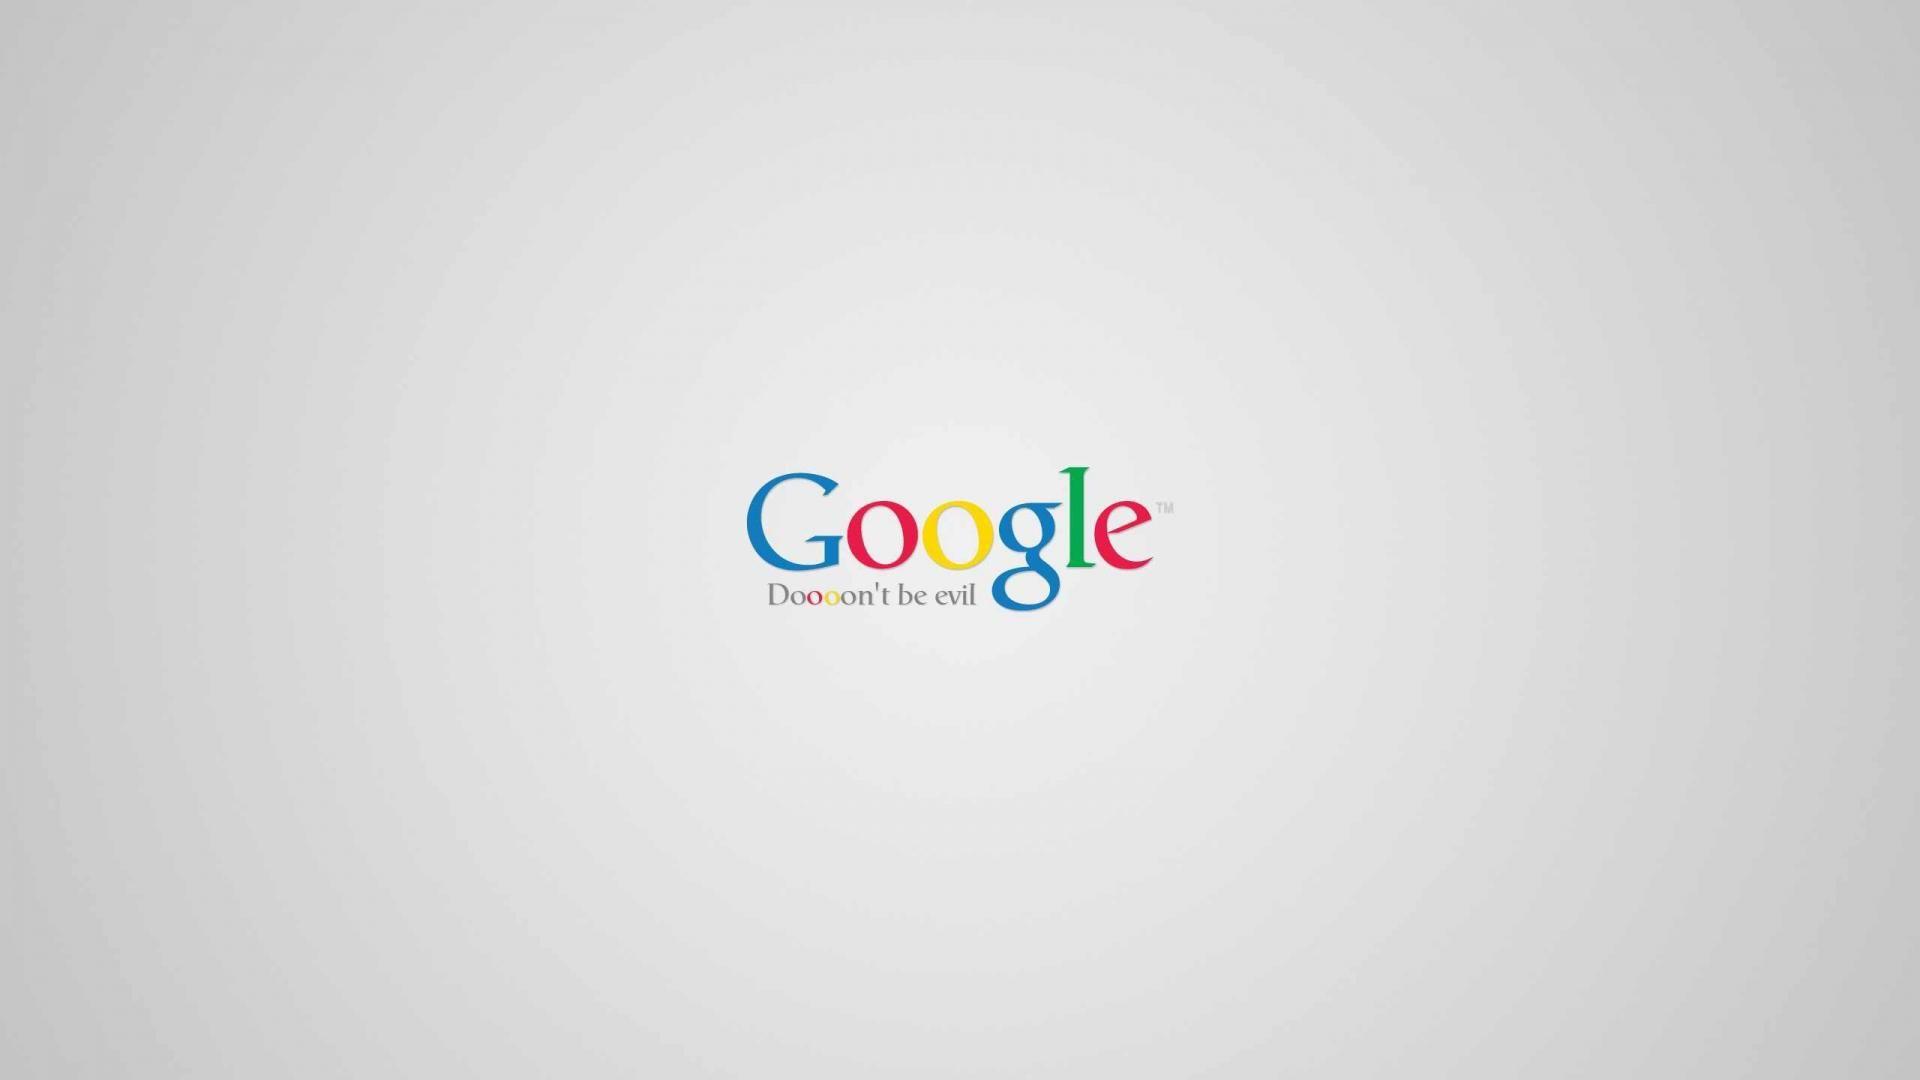 Google Google Logo High Resolution HD Wallpaper. My favorite